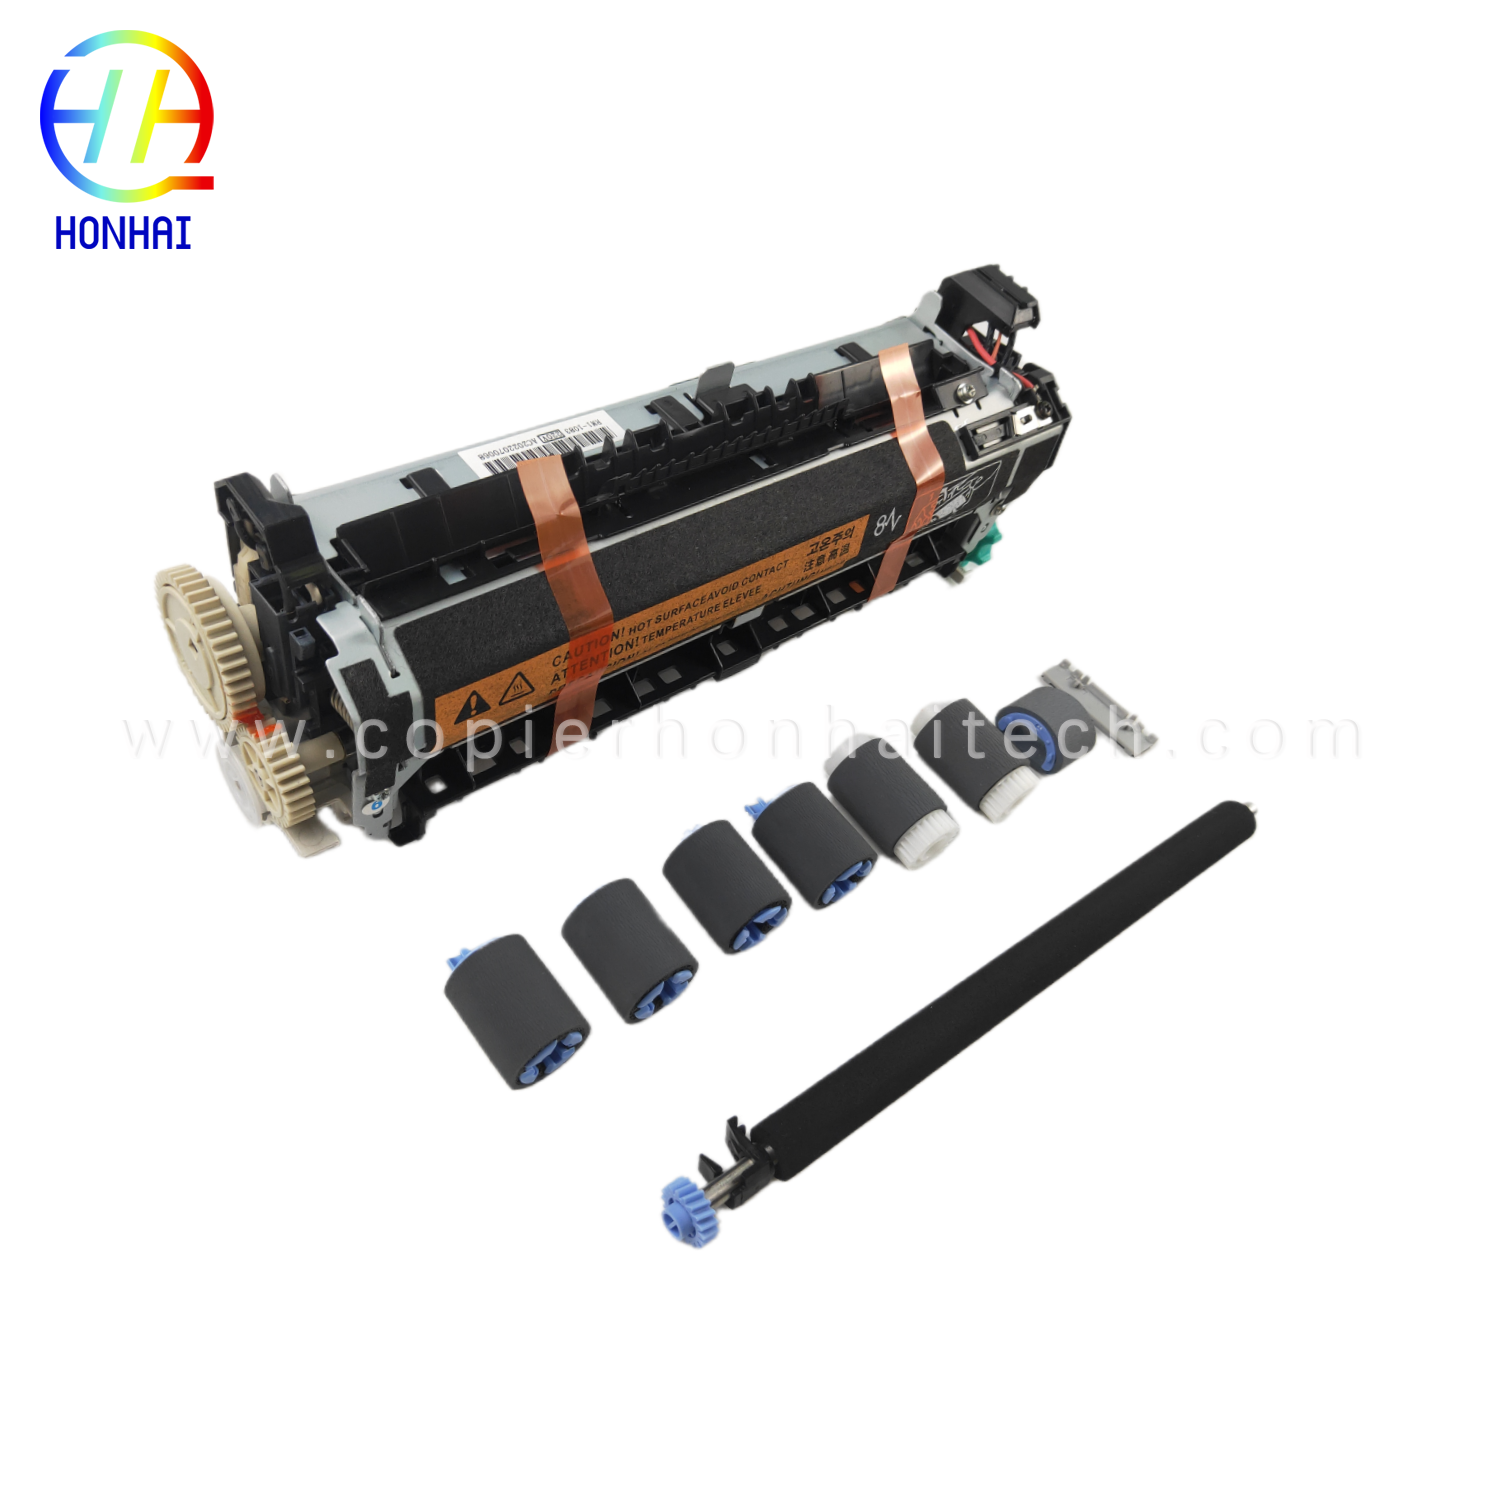 https://www.copierhonhaitech.com/maintenance-kit-220v-imported-brand-new-for-hp-laserjet-4250-4350-rm1-1083-000-product/